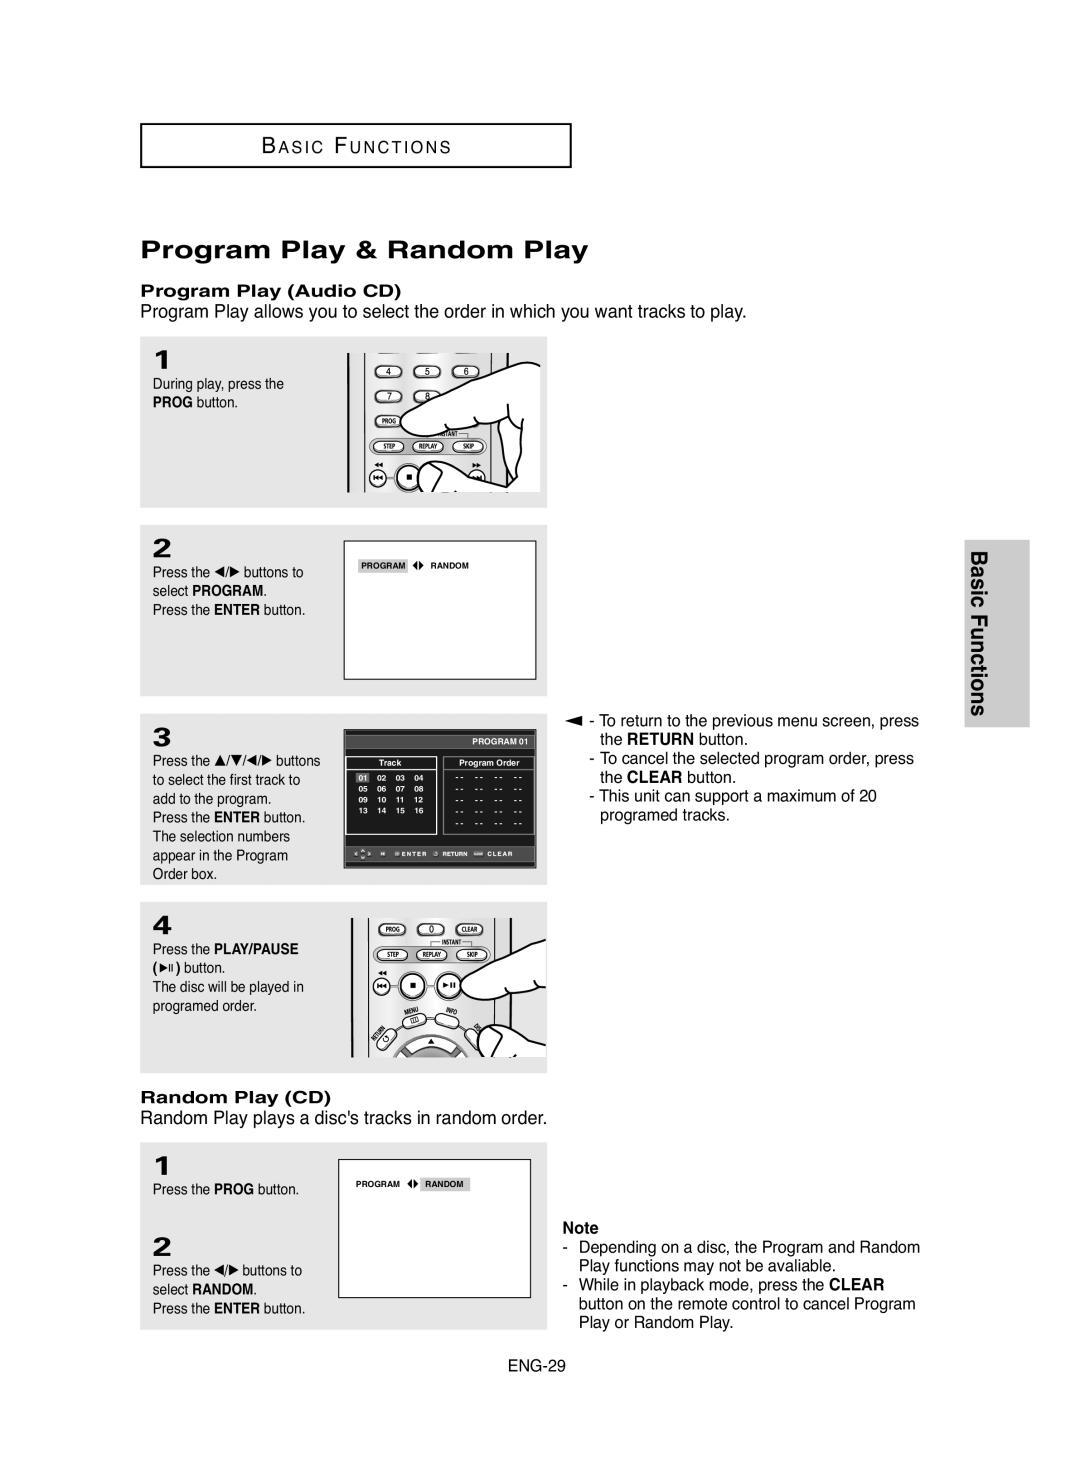 Samsung DVD-HD755 manual Program Play & Random Play, Basic Functions, Random Play plays a discs tracks in random order 